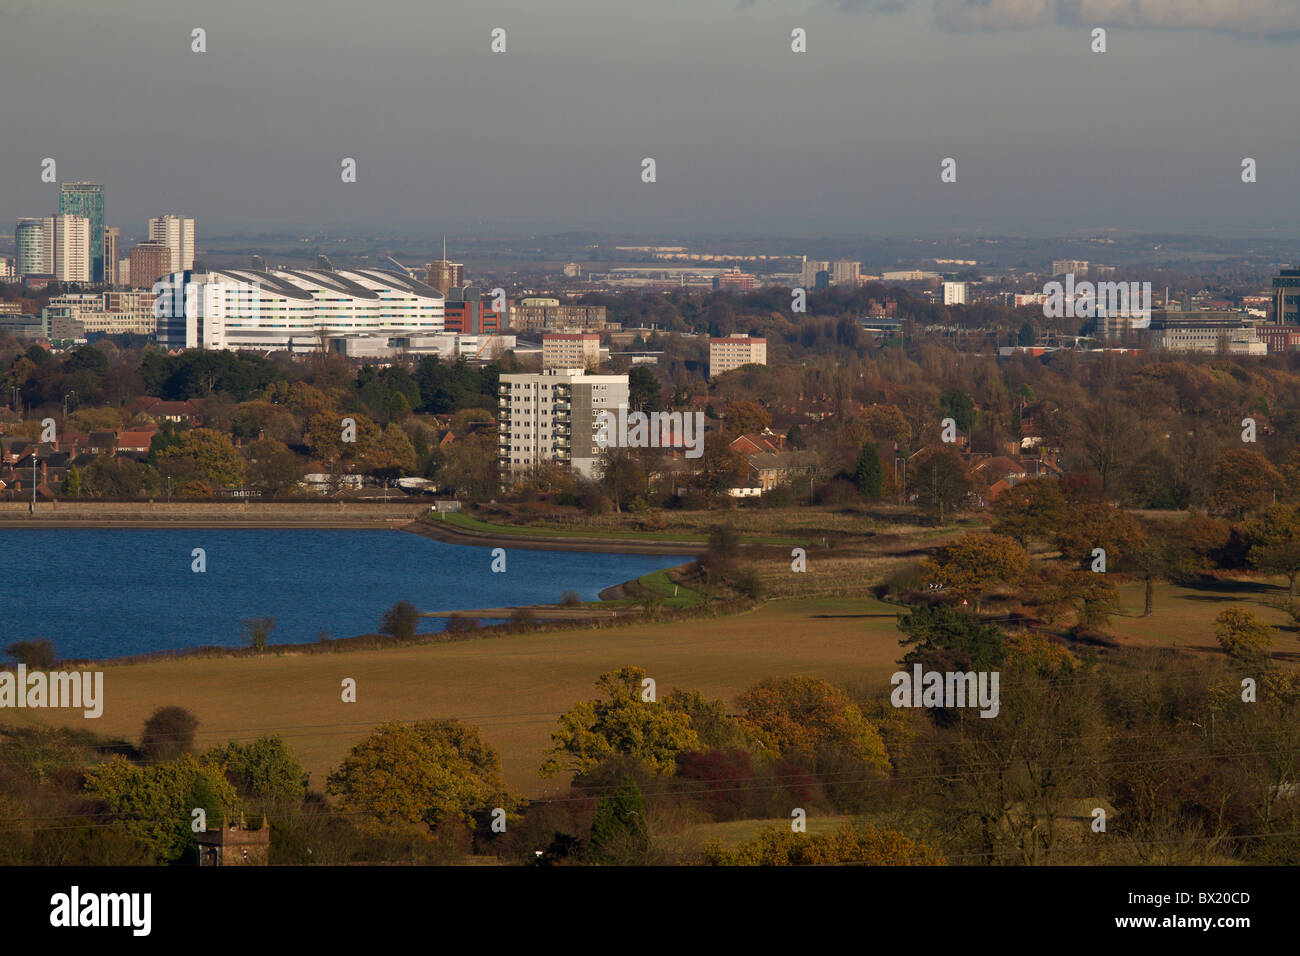 La ville de Birmingham, vus de Frankley, Birmingham, West Midlands, England, UK, Queen Elizabeth Hospital. Banque D'Images